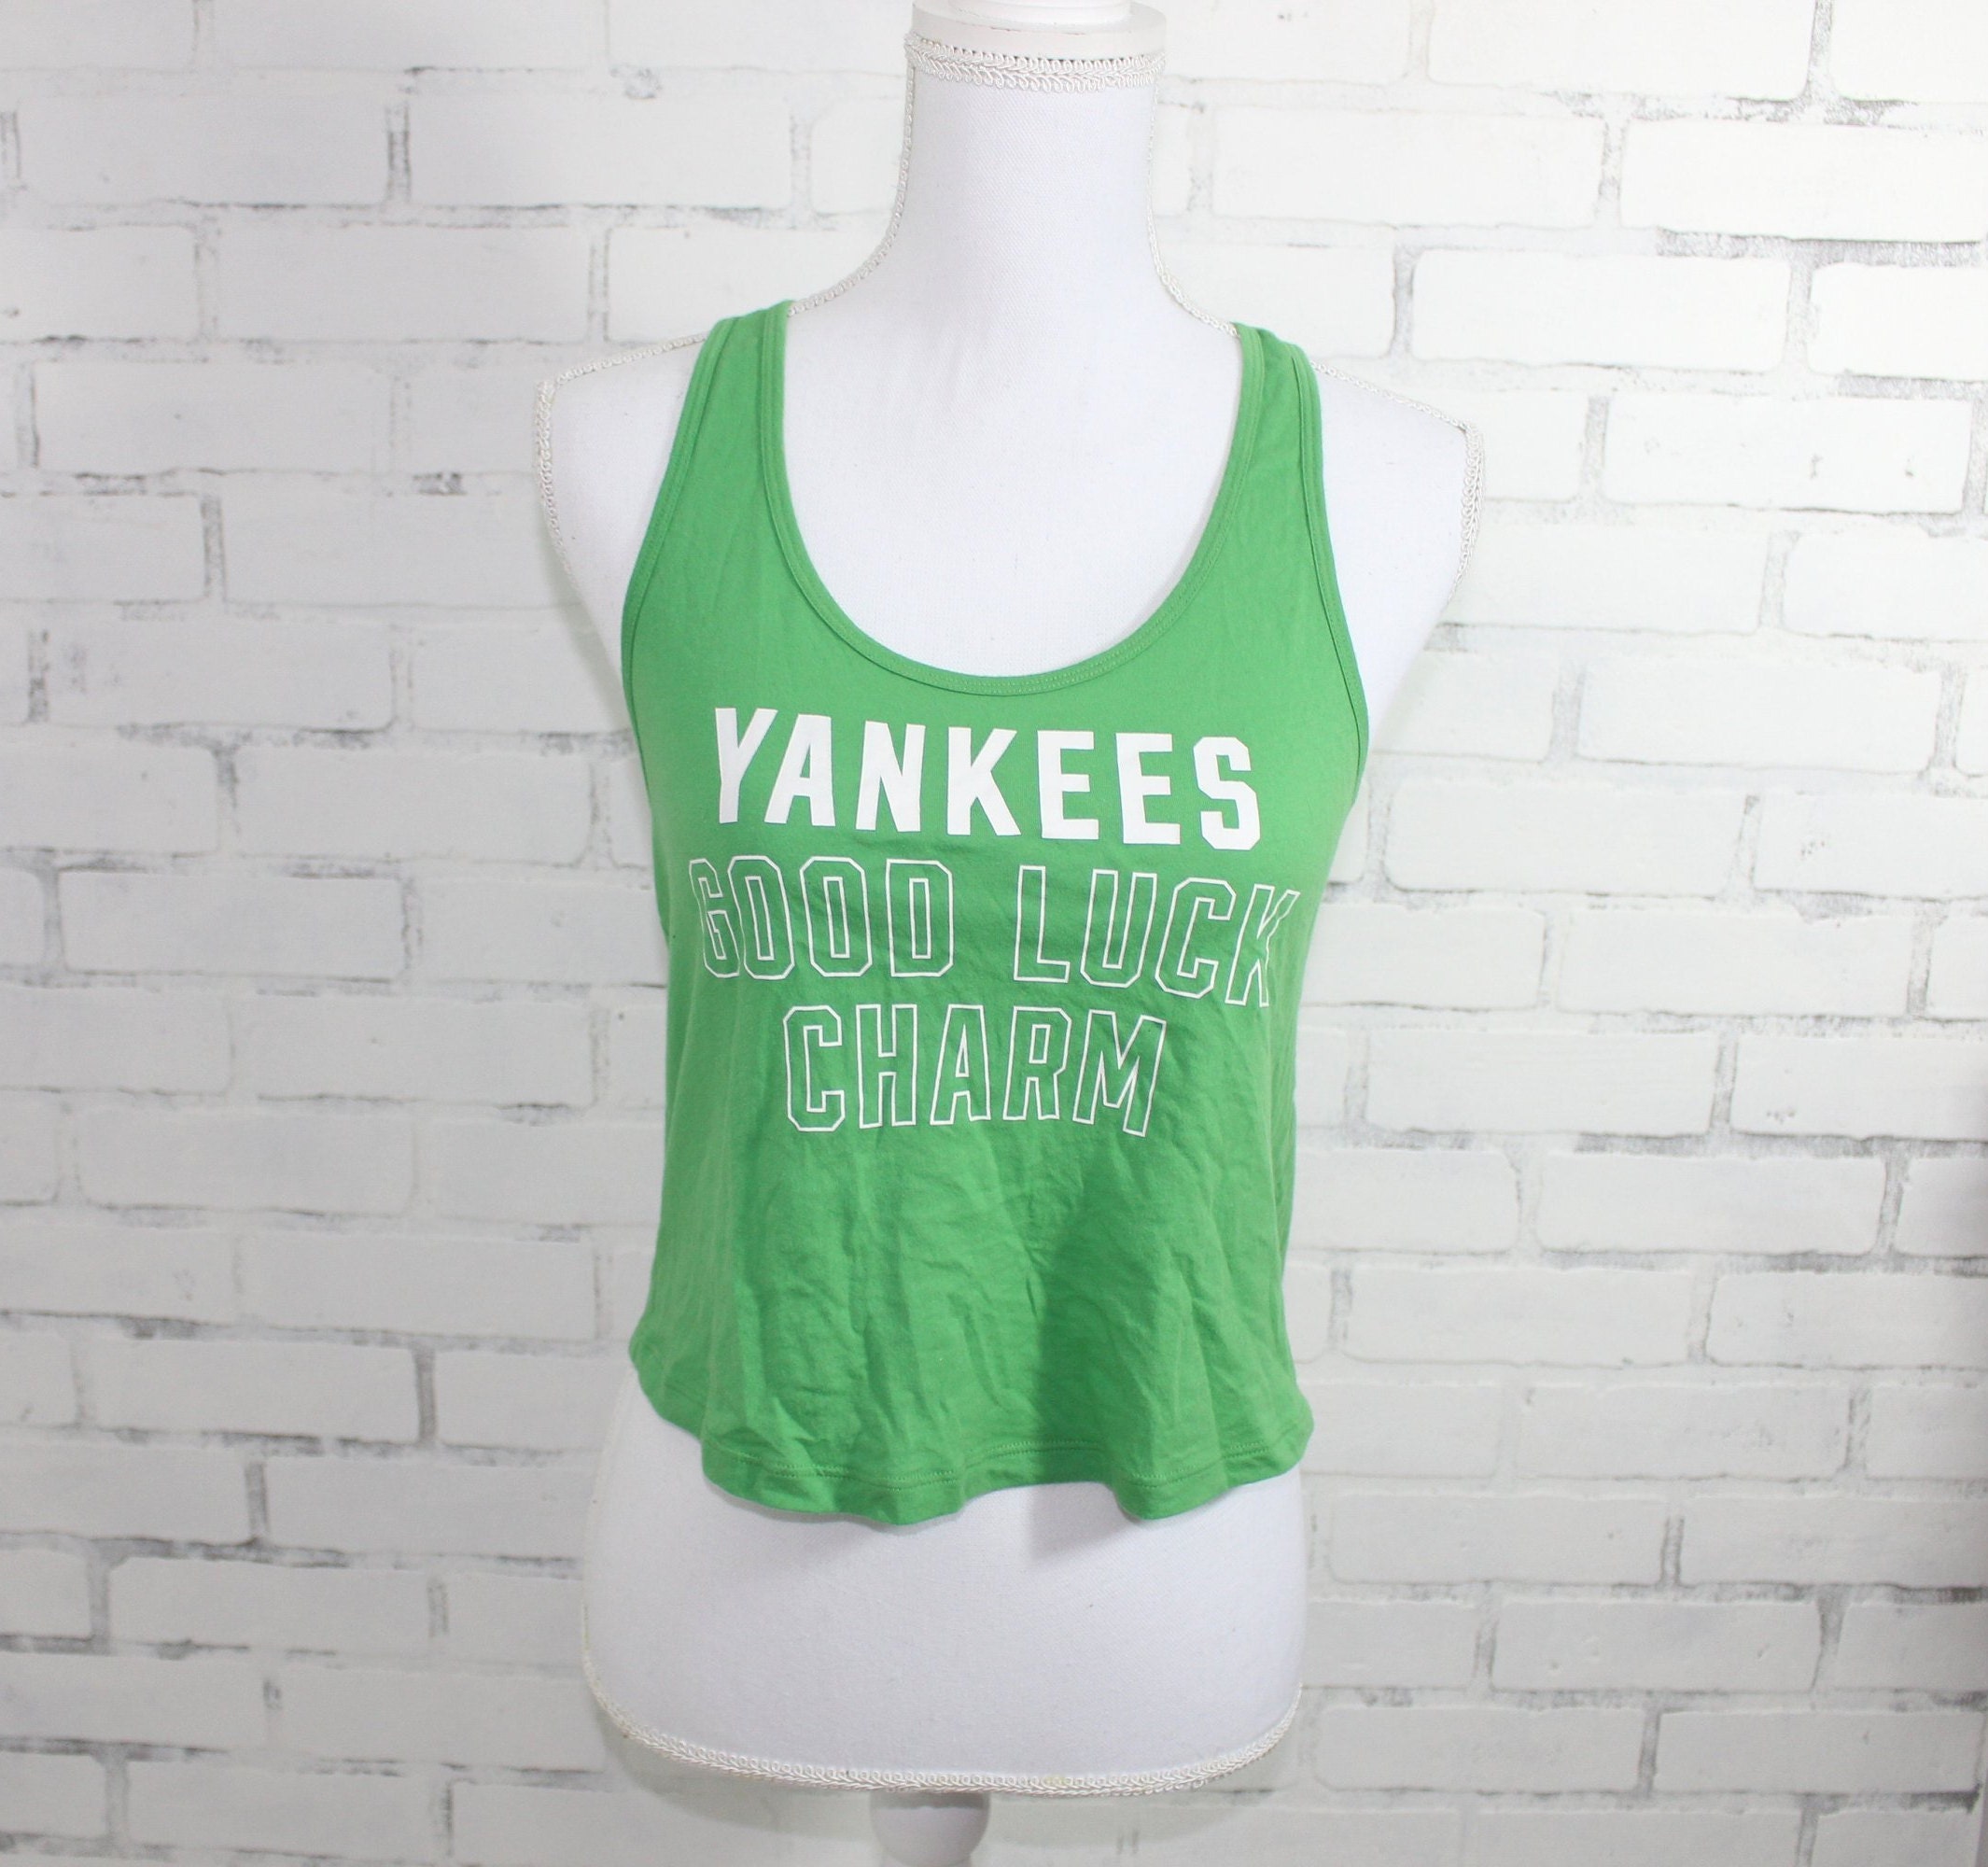 Camisetas Ladies New York Yankees oficiales, Ladies Yankees Camisetas, NY  Camisas, camisetas sin mangas